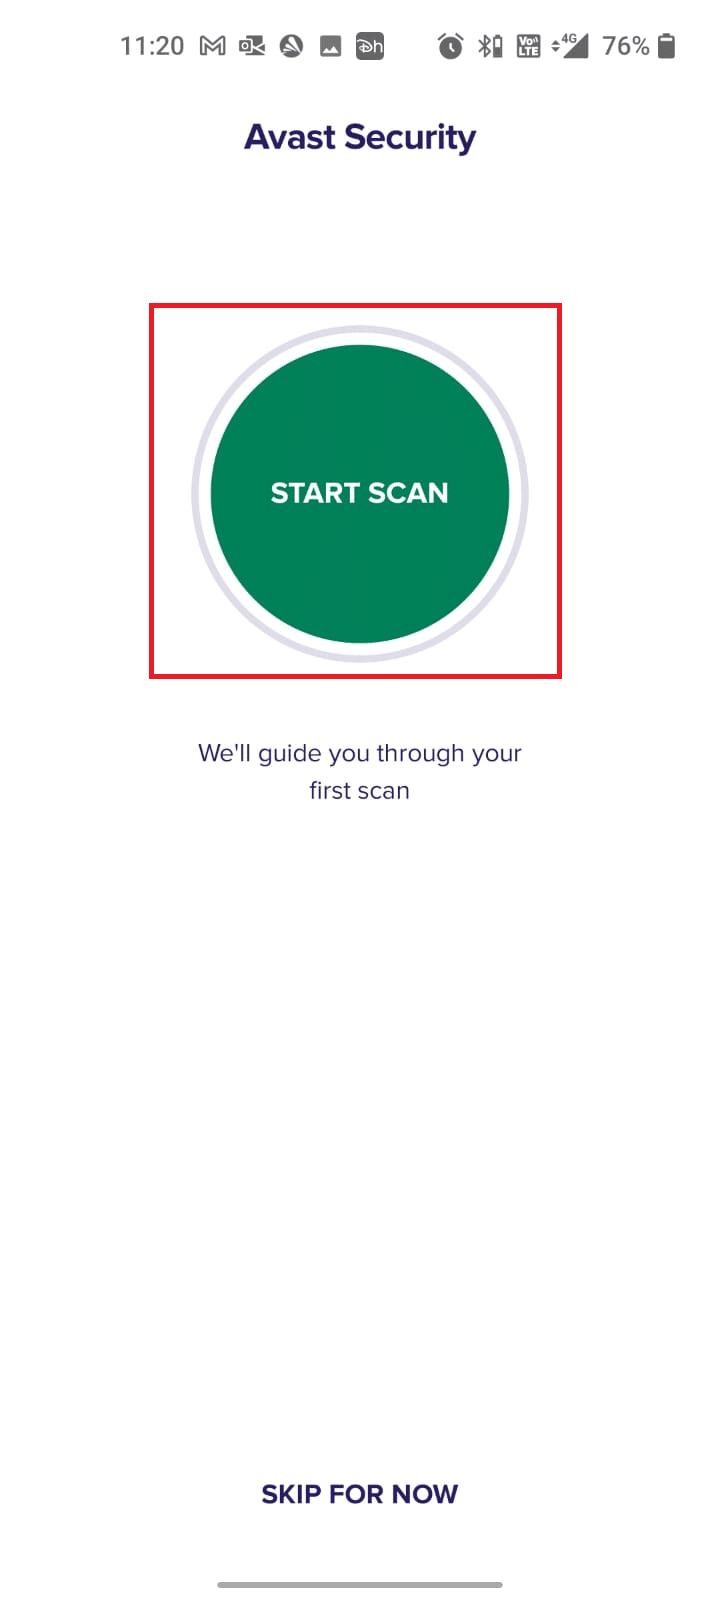 tap START SCAN. Fix Google Play Store Error Code 403